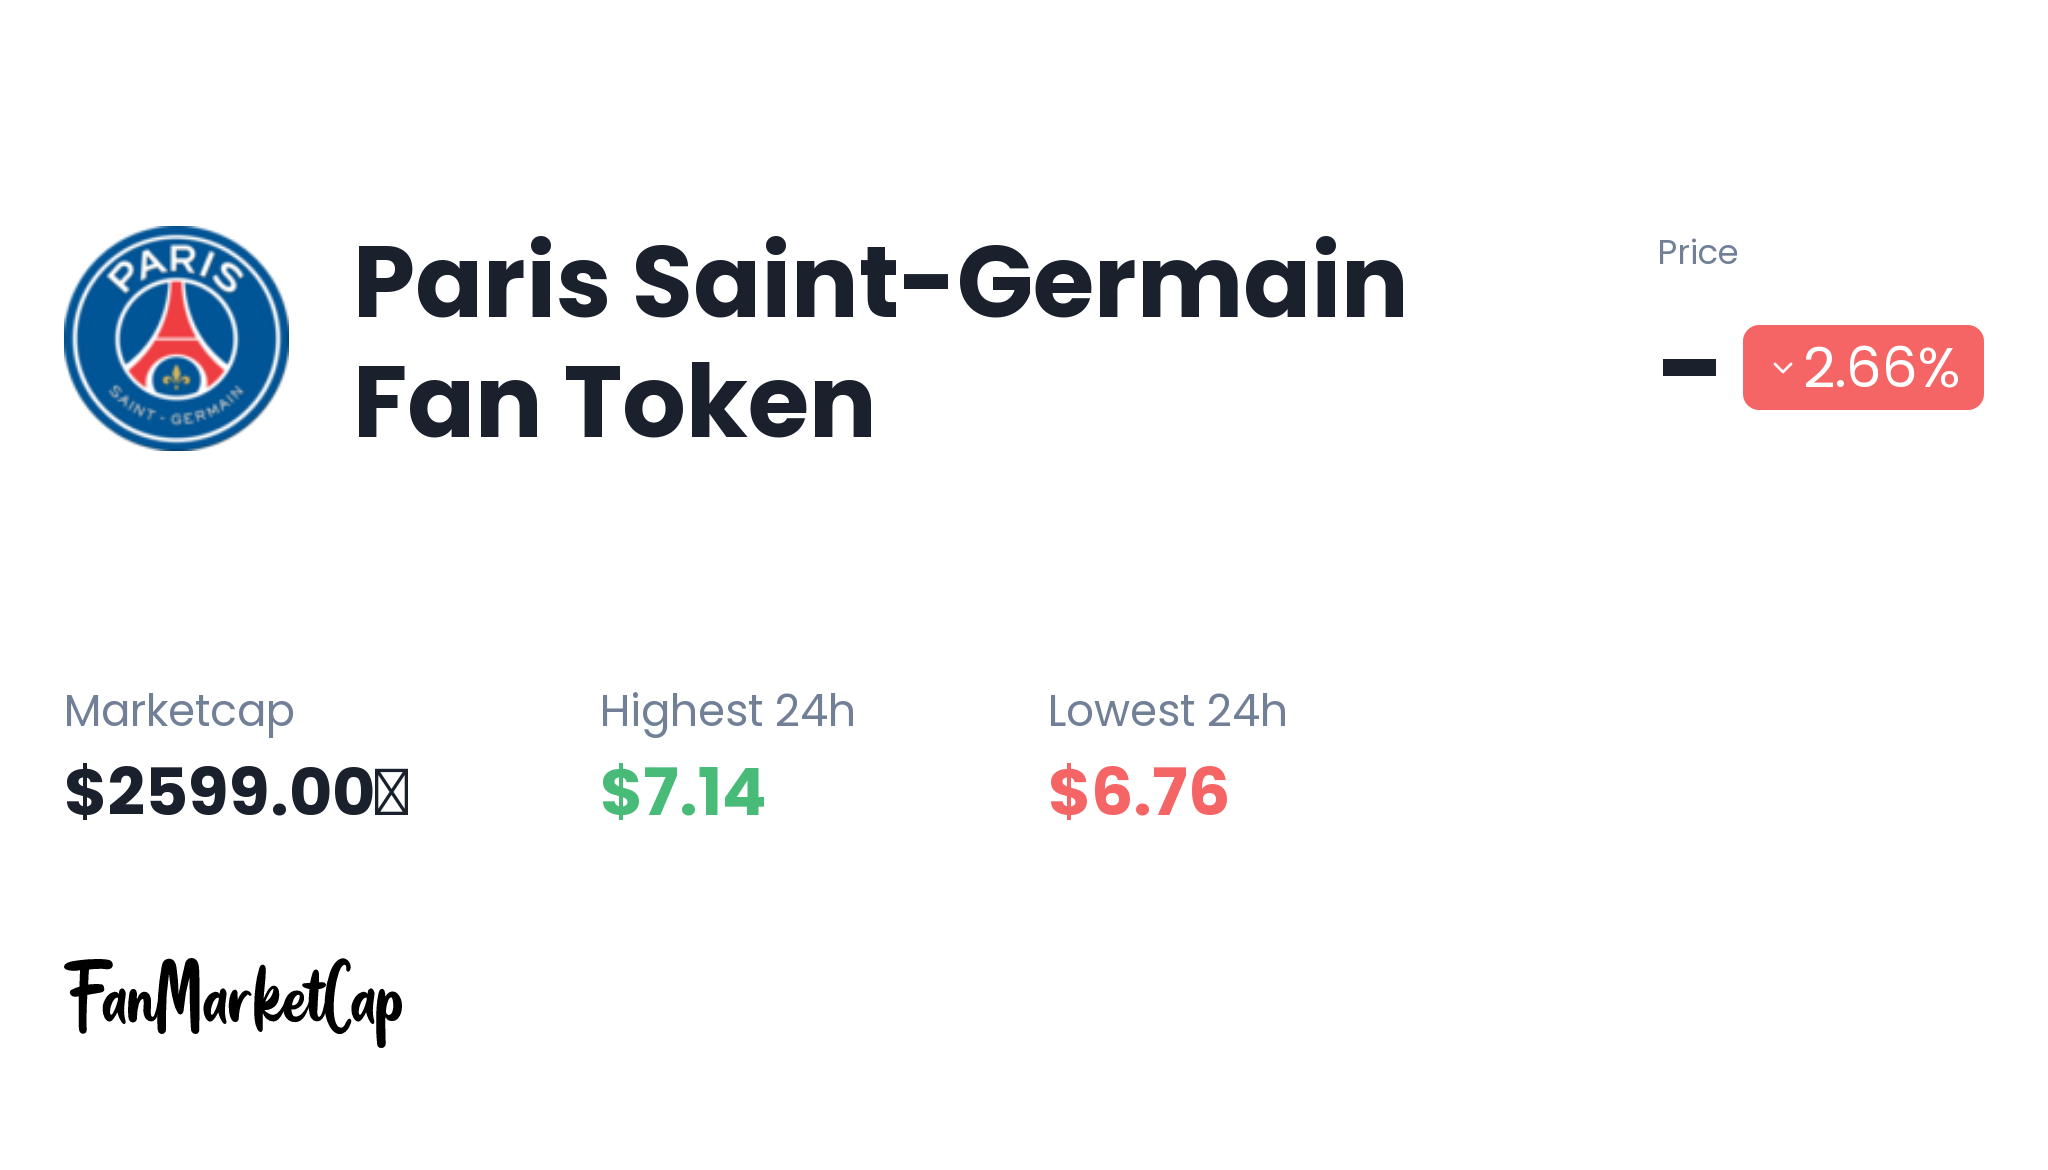 $6.77  Paris SaintGermain Fan Token (PSG) price, marketcap and info